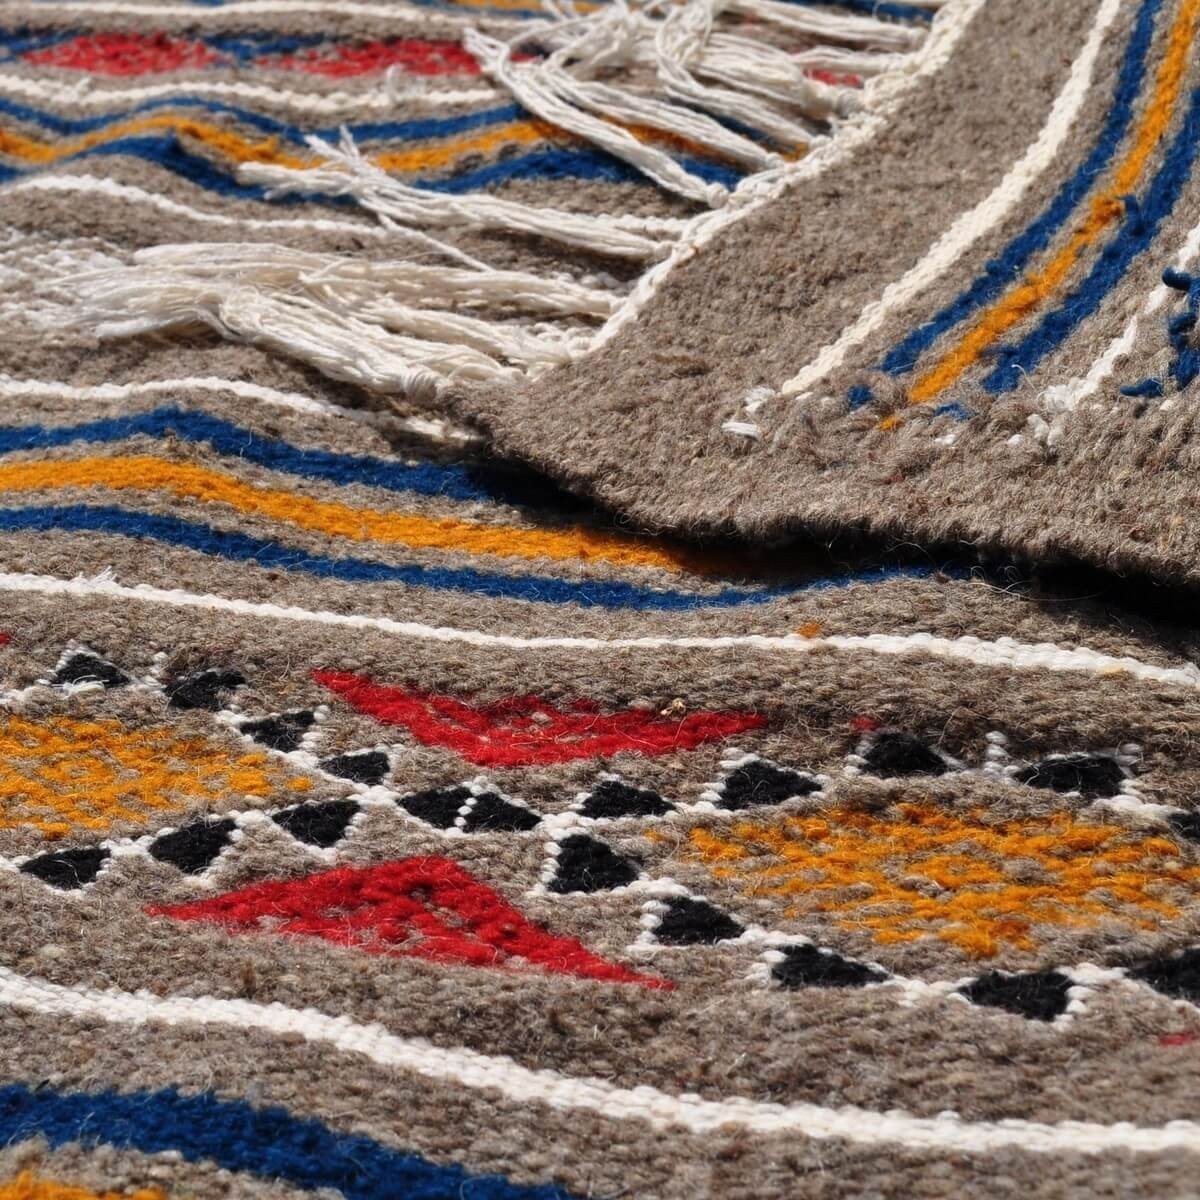 Berber tapijt Tapijt Kilim El Bey 145x255 Grijs/Rood/Blauw/Jeel (Handgeweven, Wol, Tunesië) Tunesisch kilimdeken, Marokkaanse st